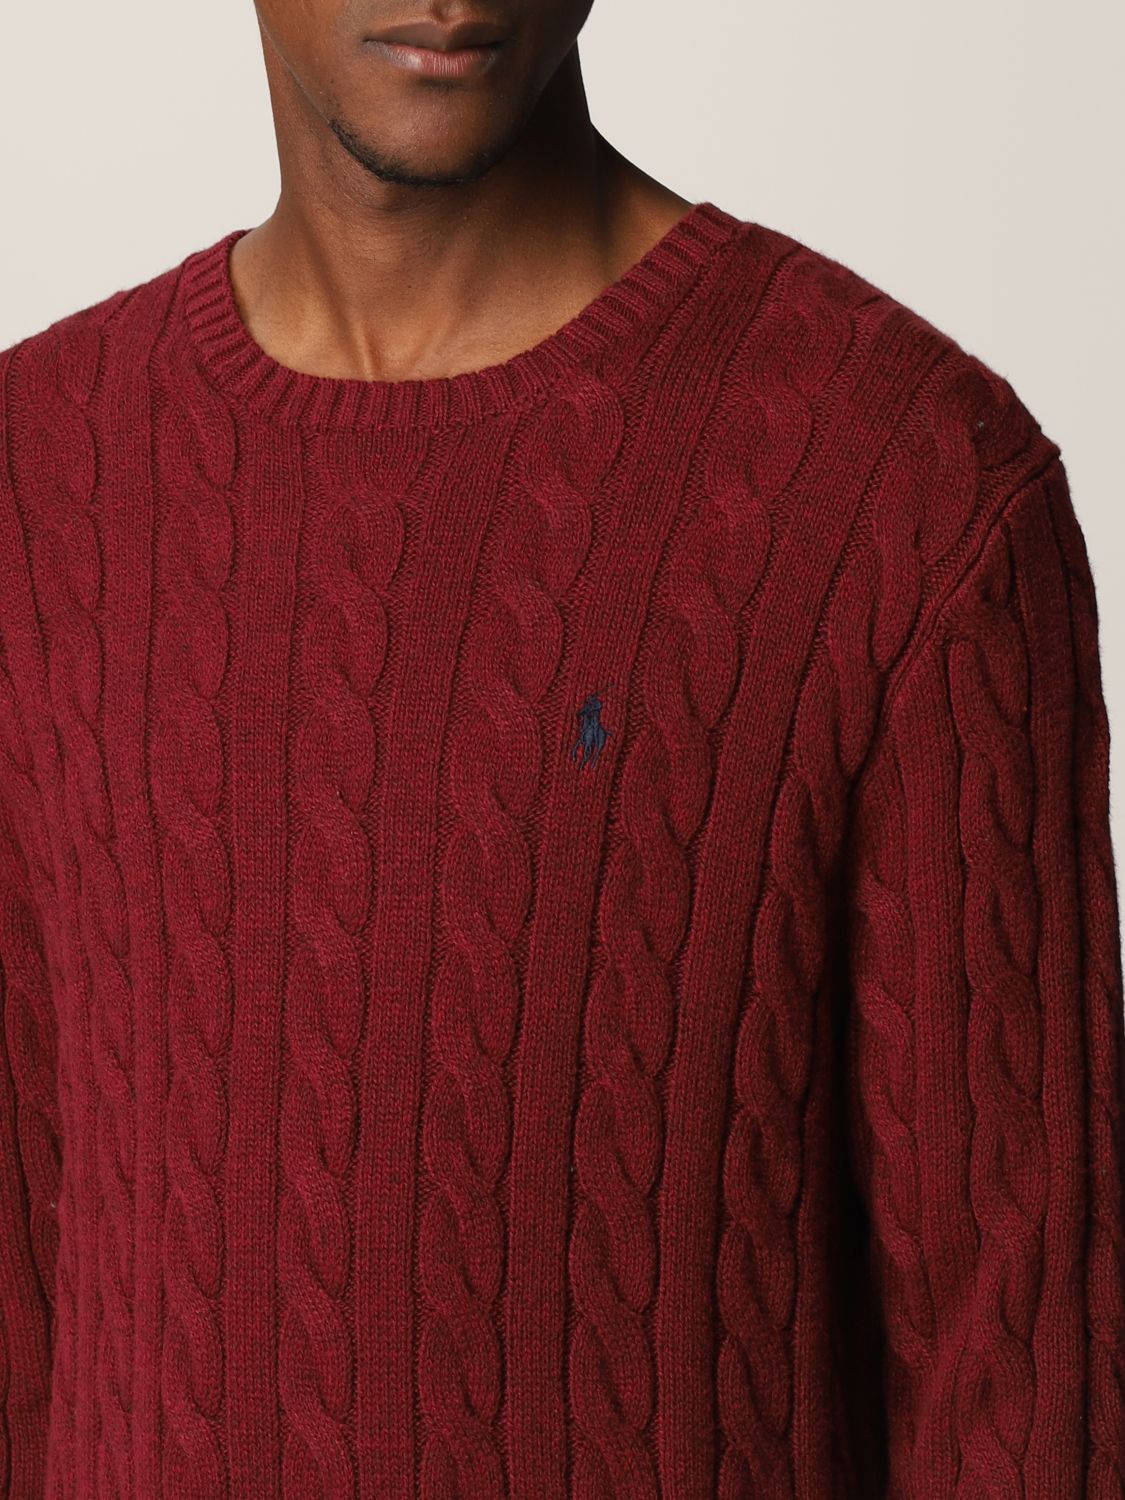 POLO RALPH LAUREN: cotton sweater - Red | Polo Ralph Lauren sweater  710775885 online on 